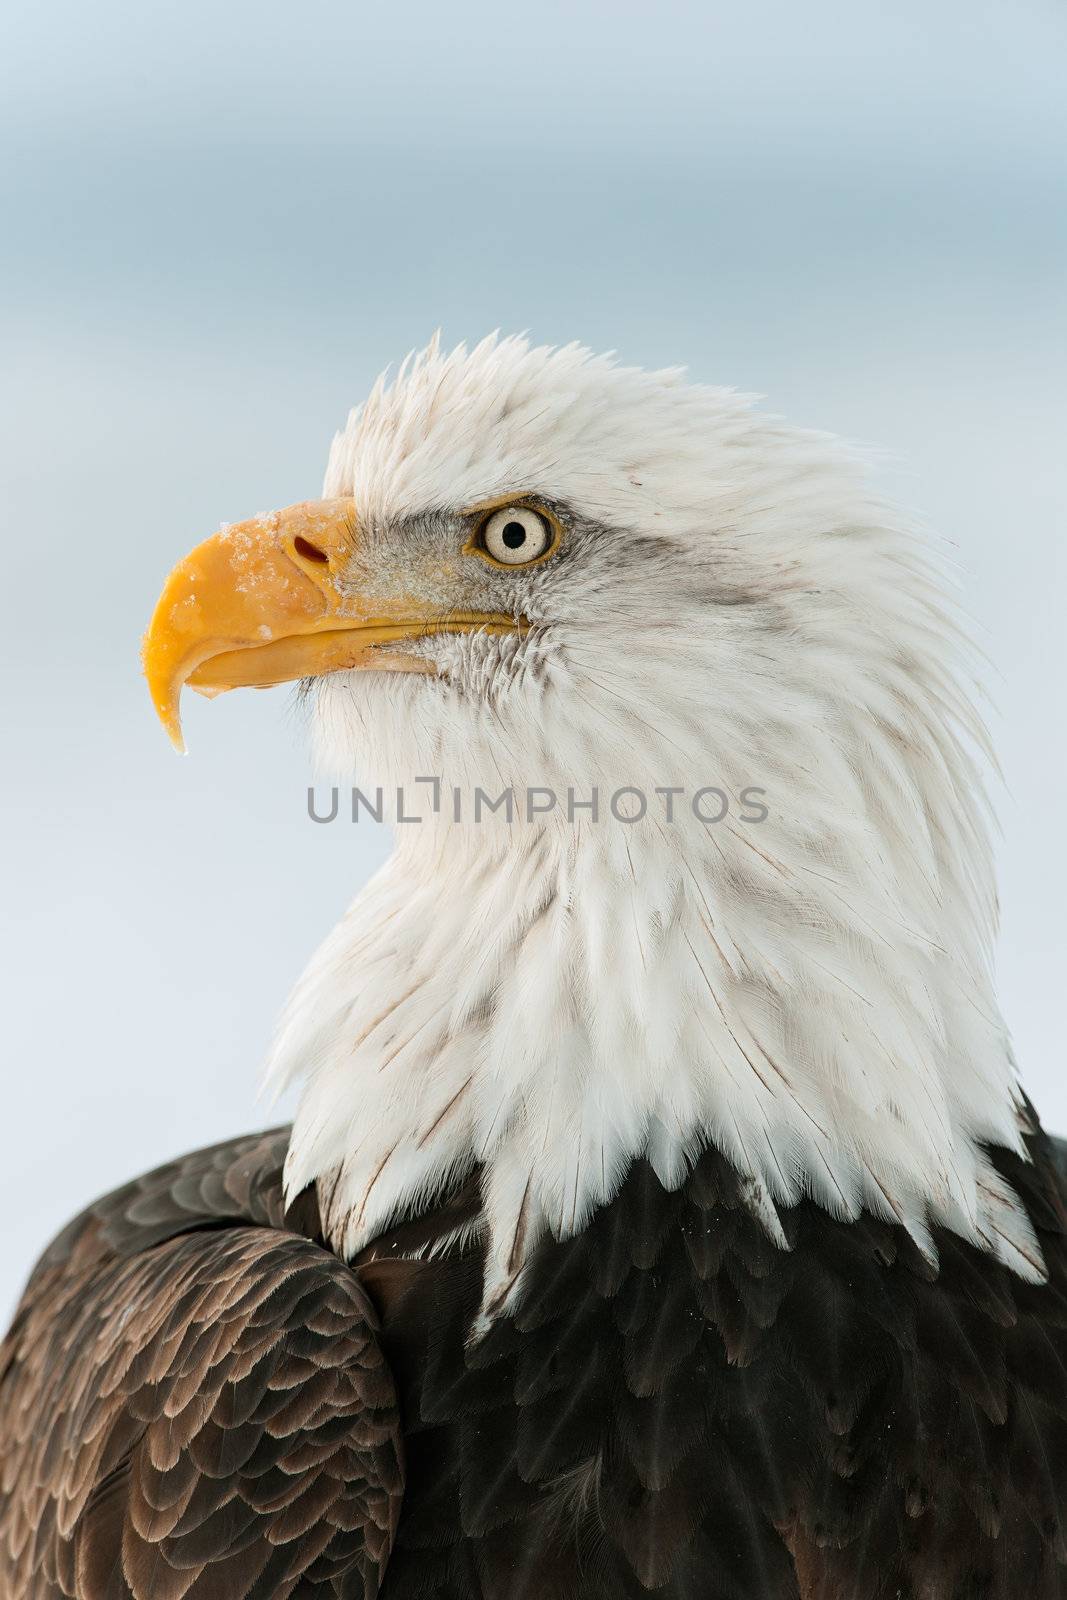 Winter Close up Portrait of a Bald eagle (Haliaeetus leucocephalus washingtoniensis ). Isolate on white